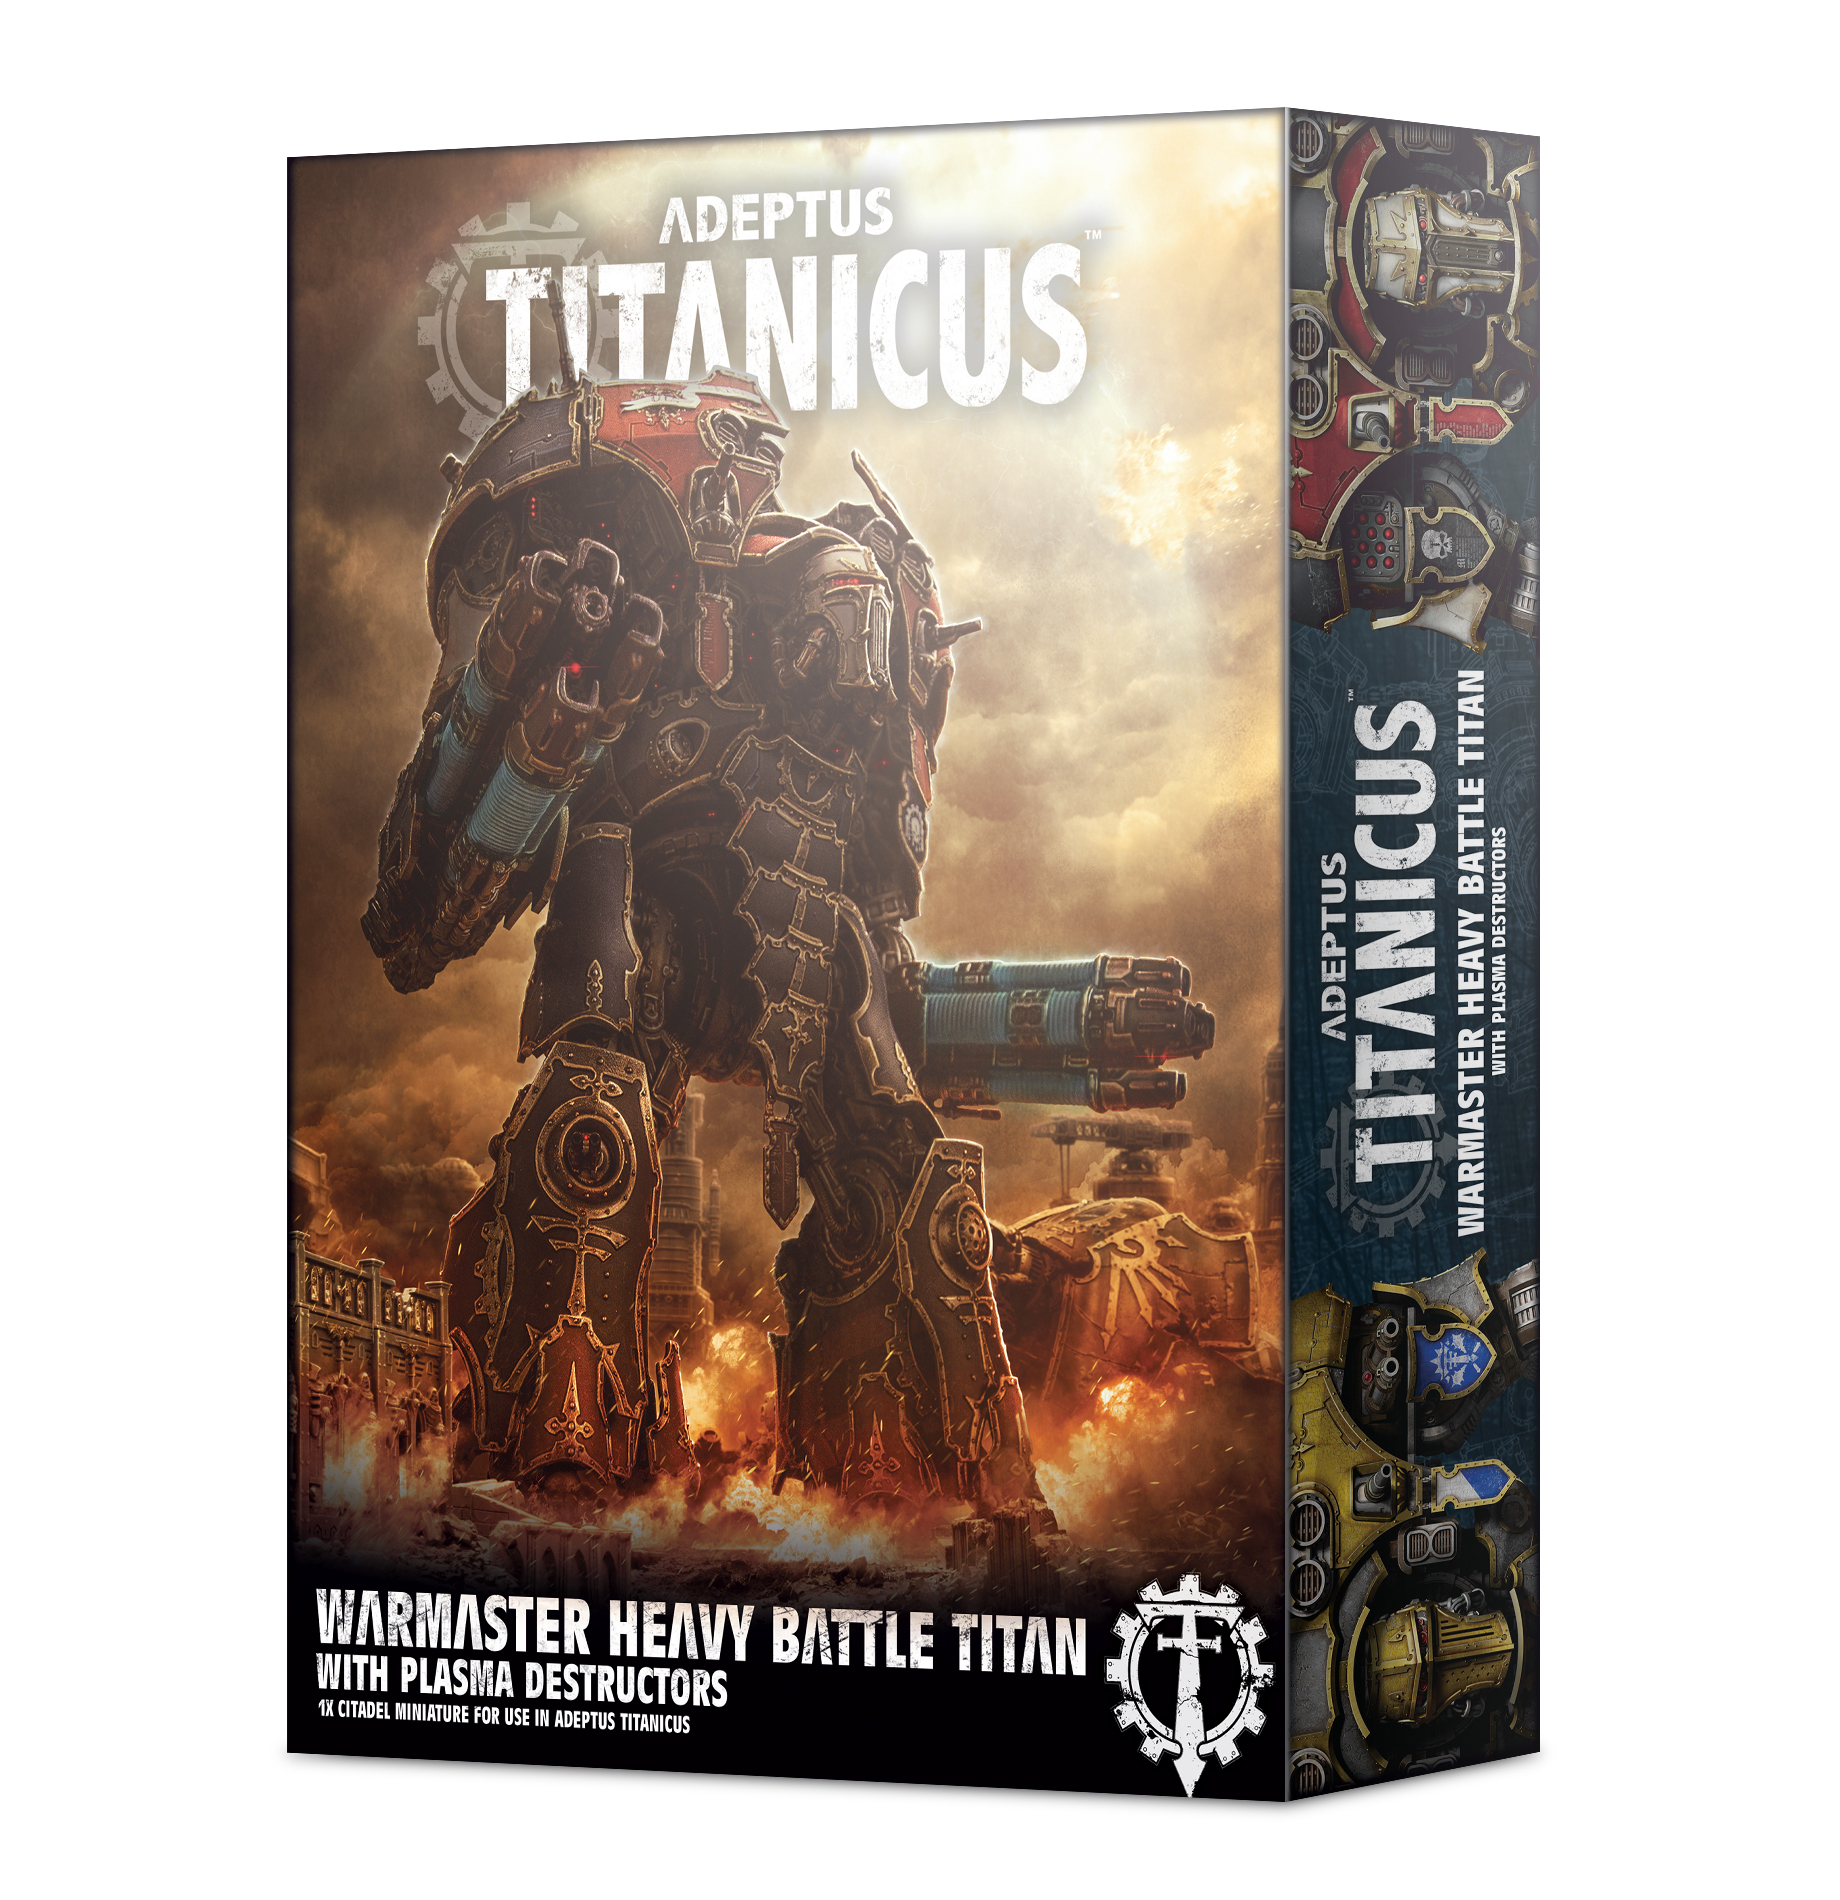 Warmaster Heavy Battle titan avec destructeurs à plasma - 400-41 - Adeptus Titanicus - Warhammer